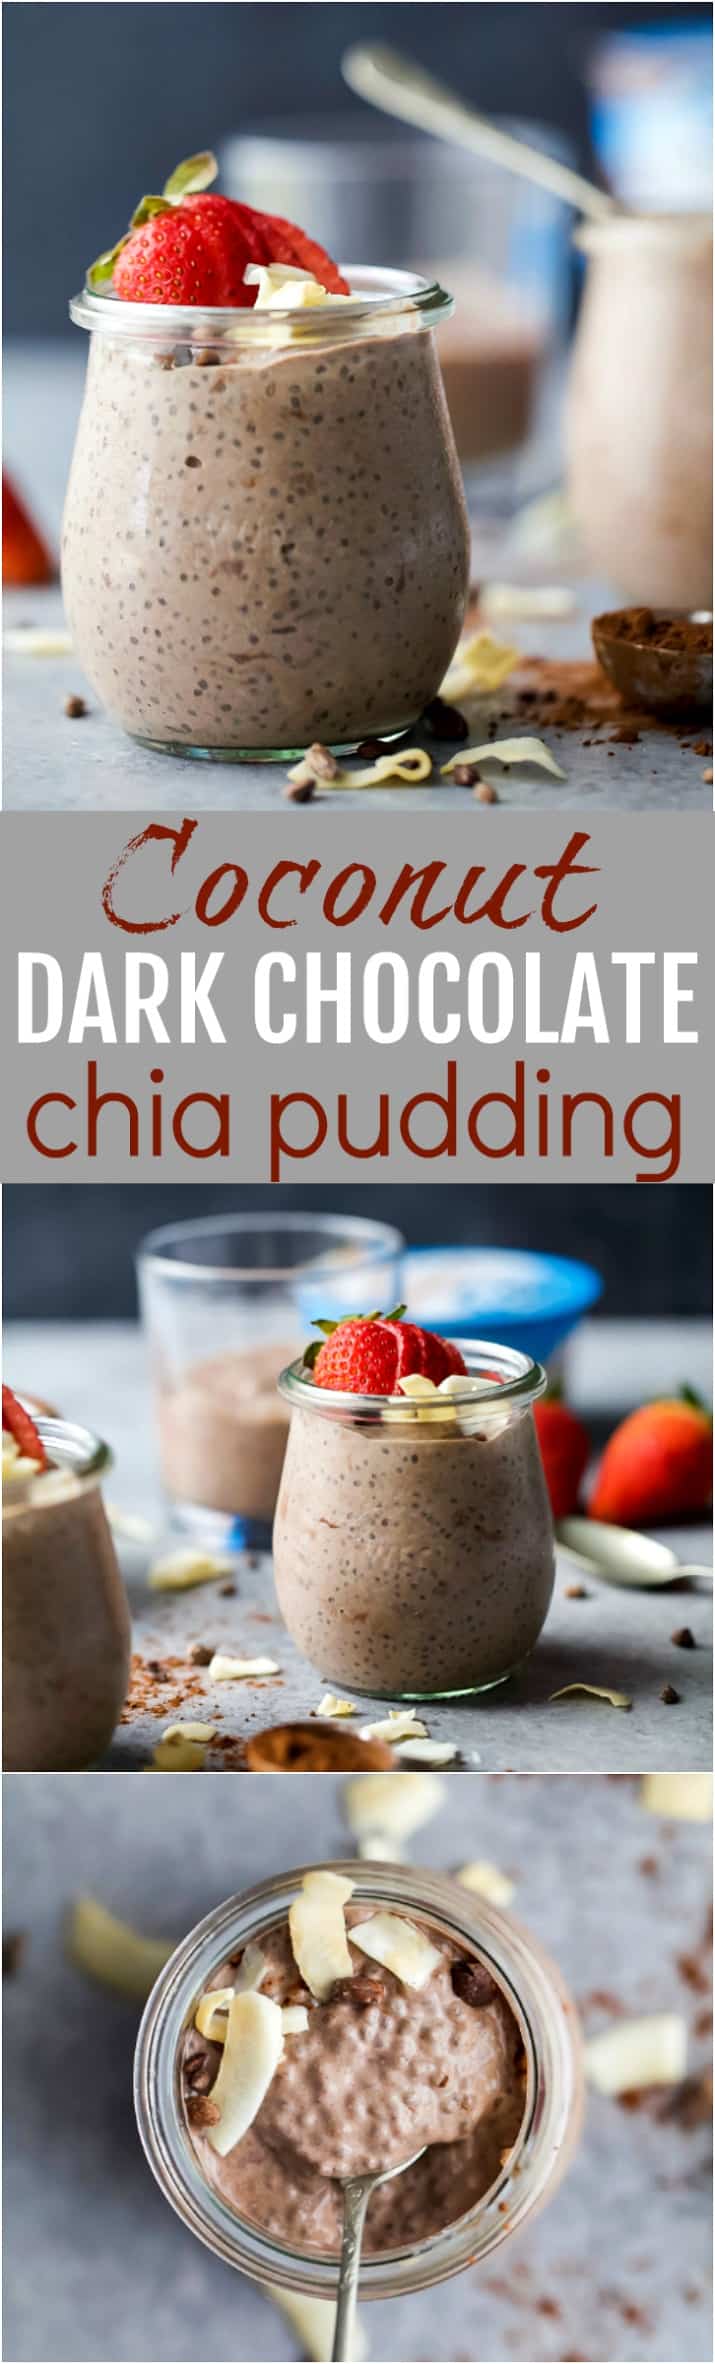 Pinterest collage for Coconut Dark Chocolate Chia Pudding recipe